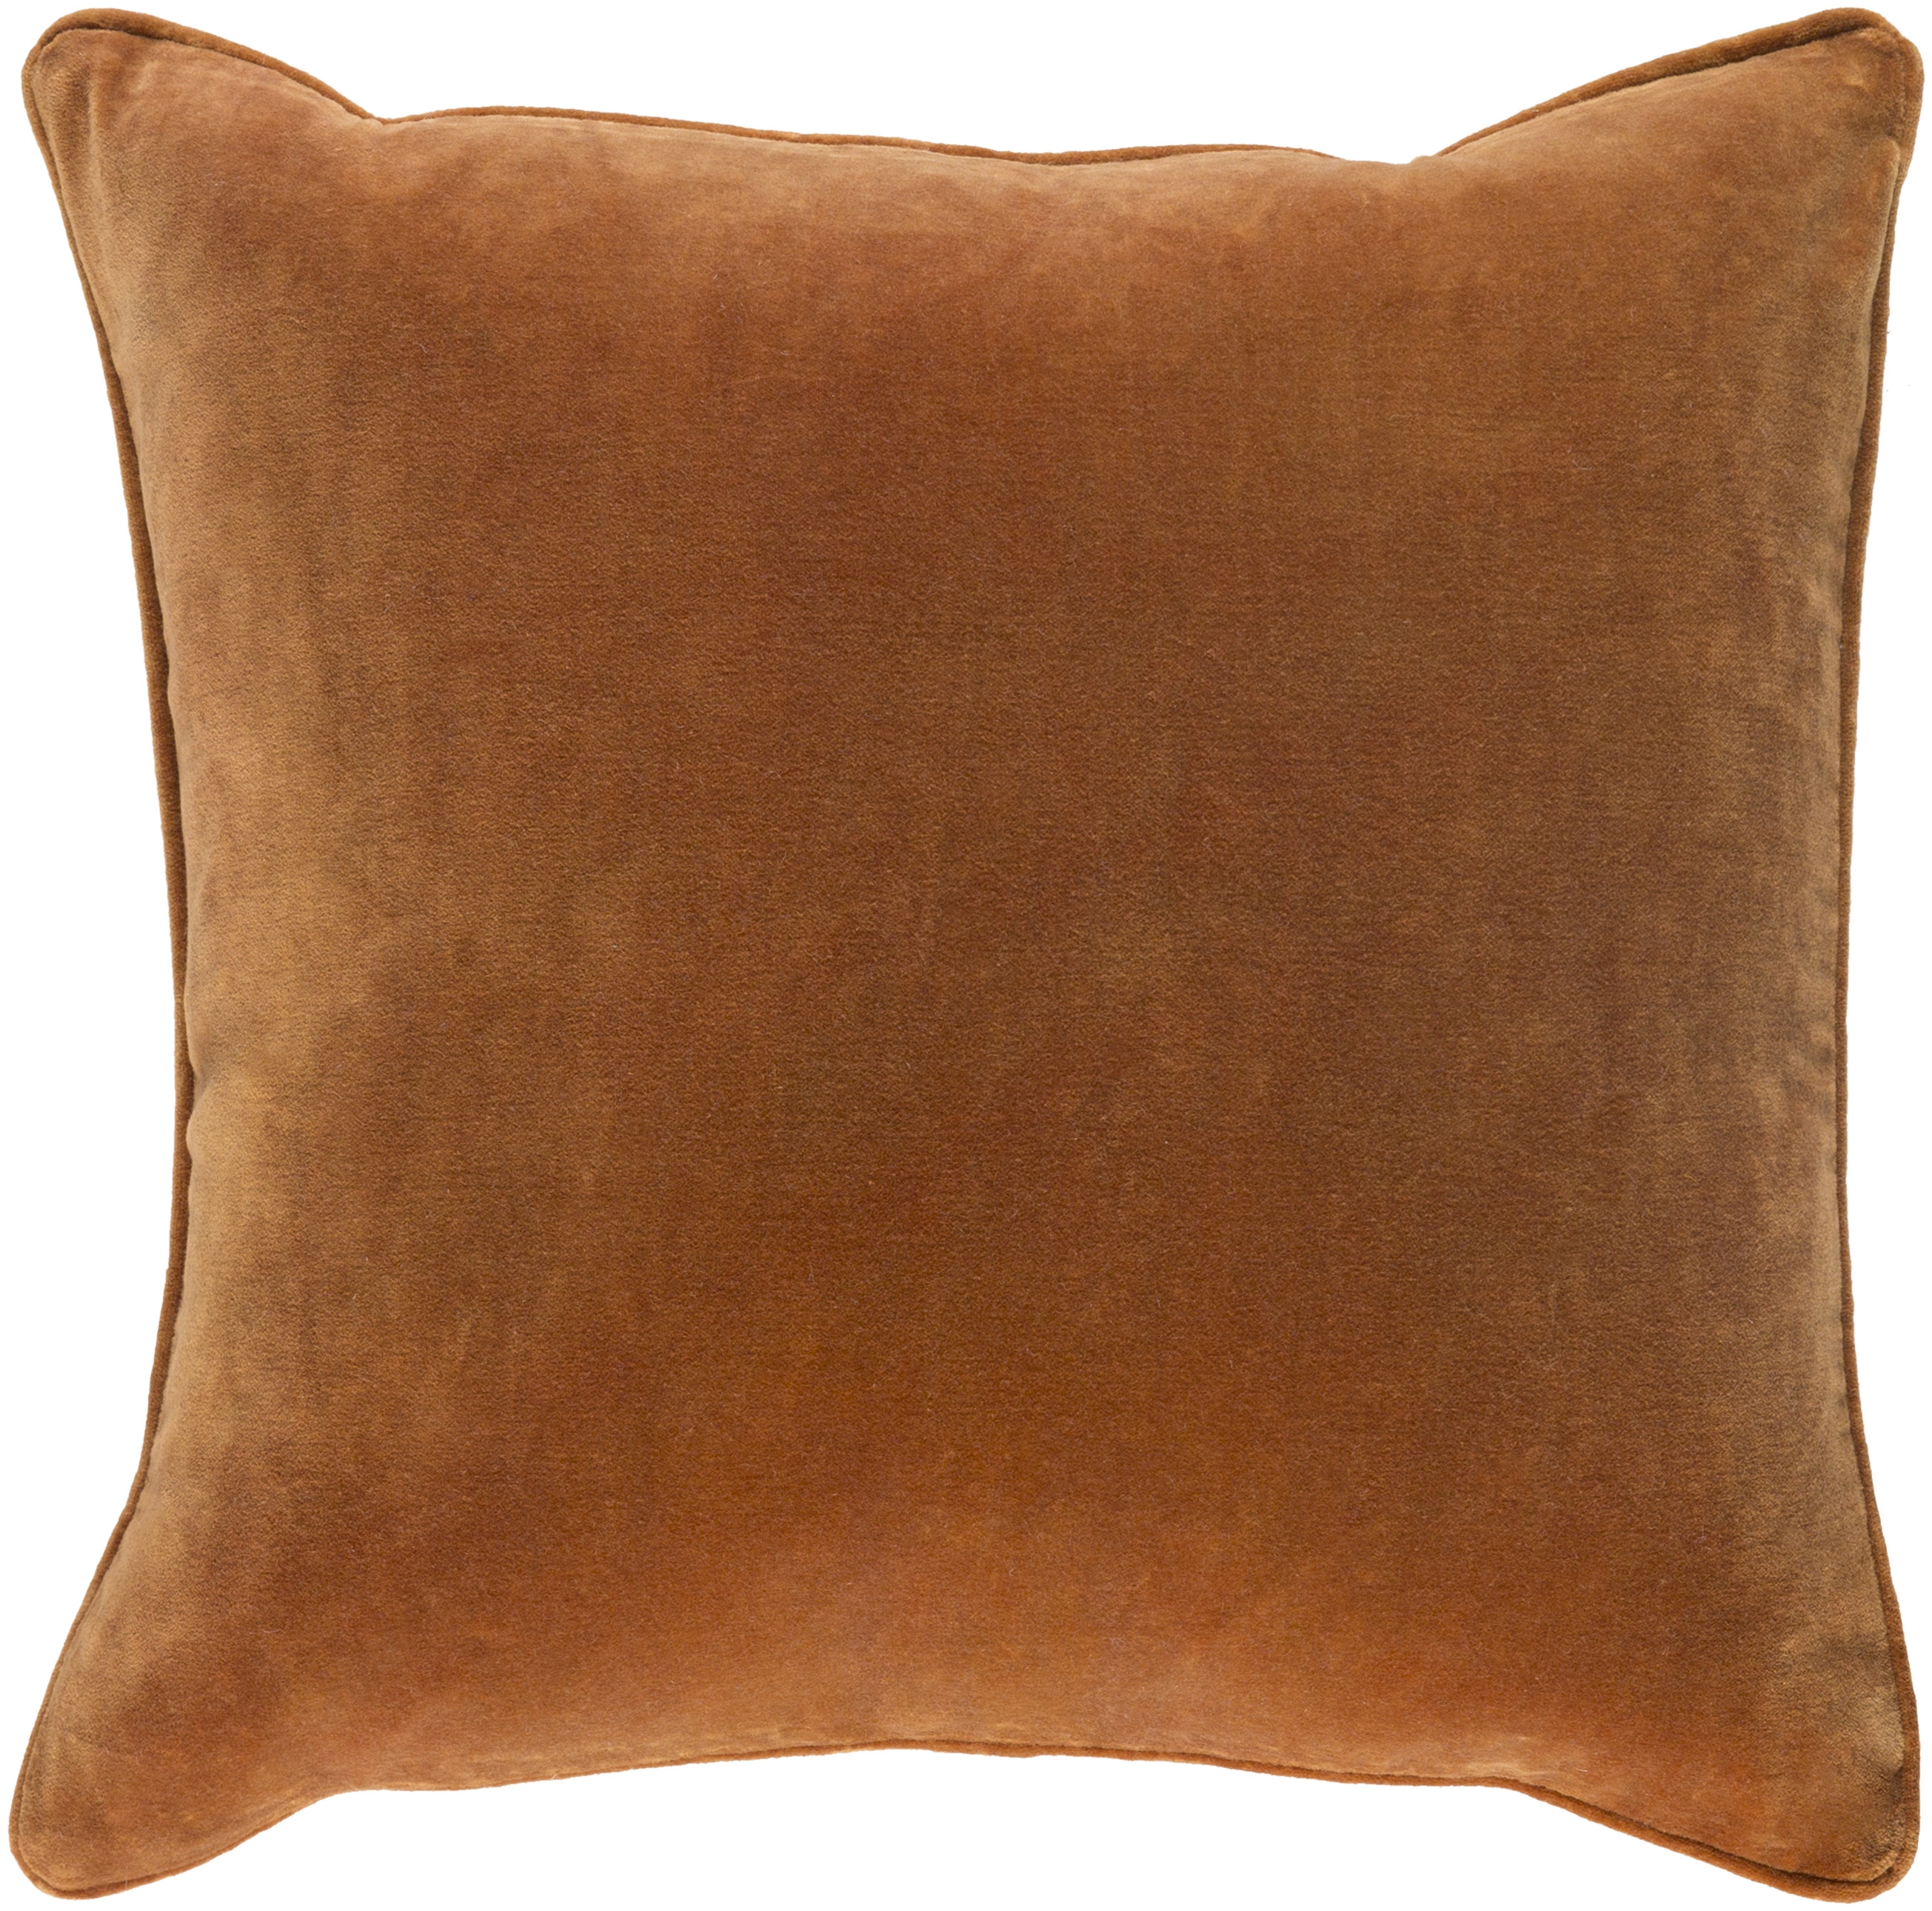 Safflower Pillow Cover, Burnt Orange, 22" x 22" - Image 1